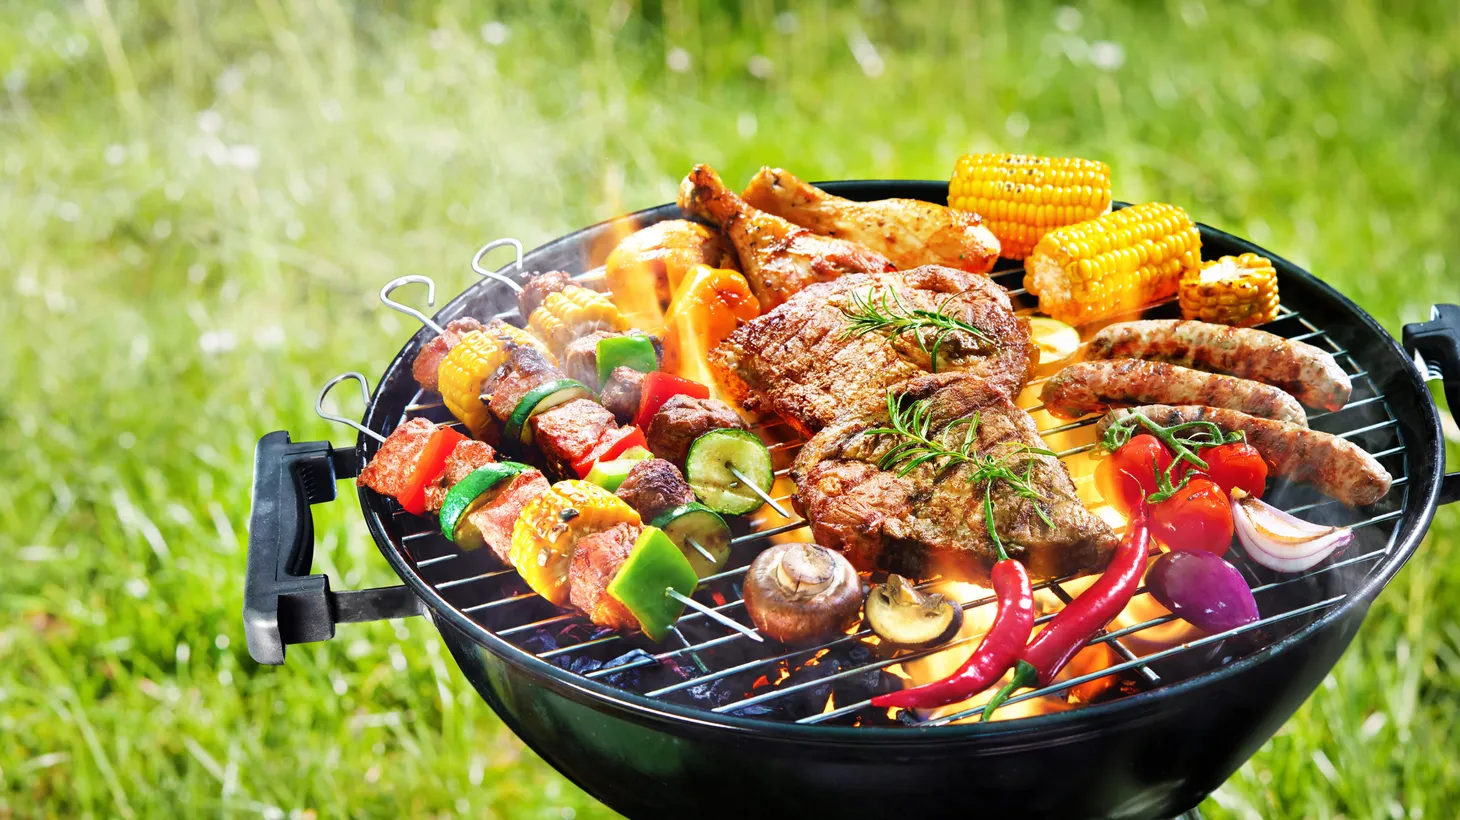 Molestar Triatleta brillo Meaty, mouthwatering BBQ recipes for summer grilling season | KCRW